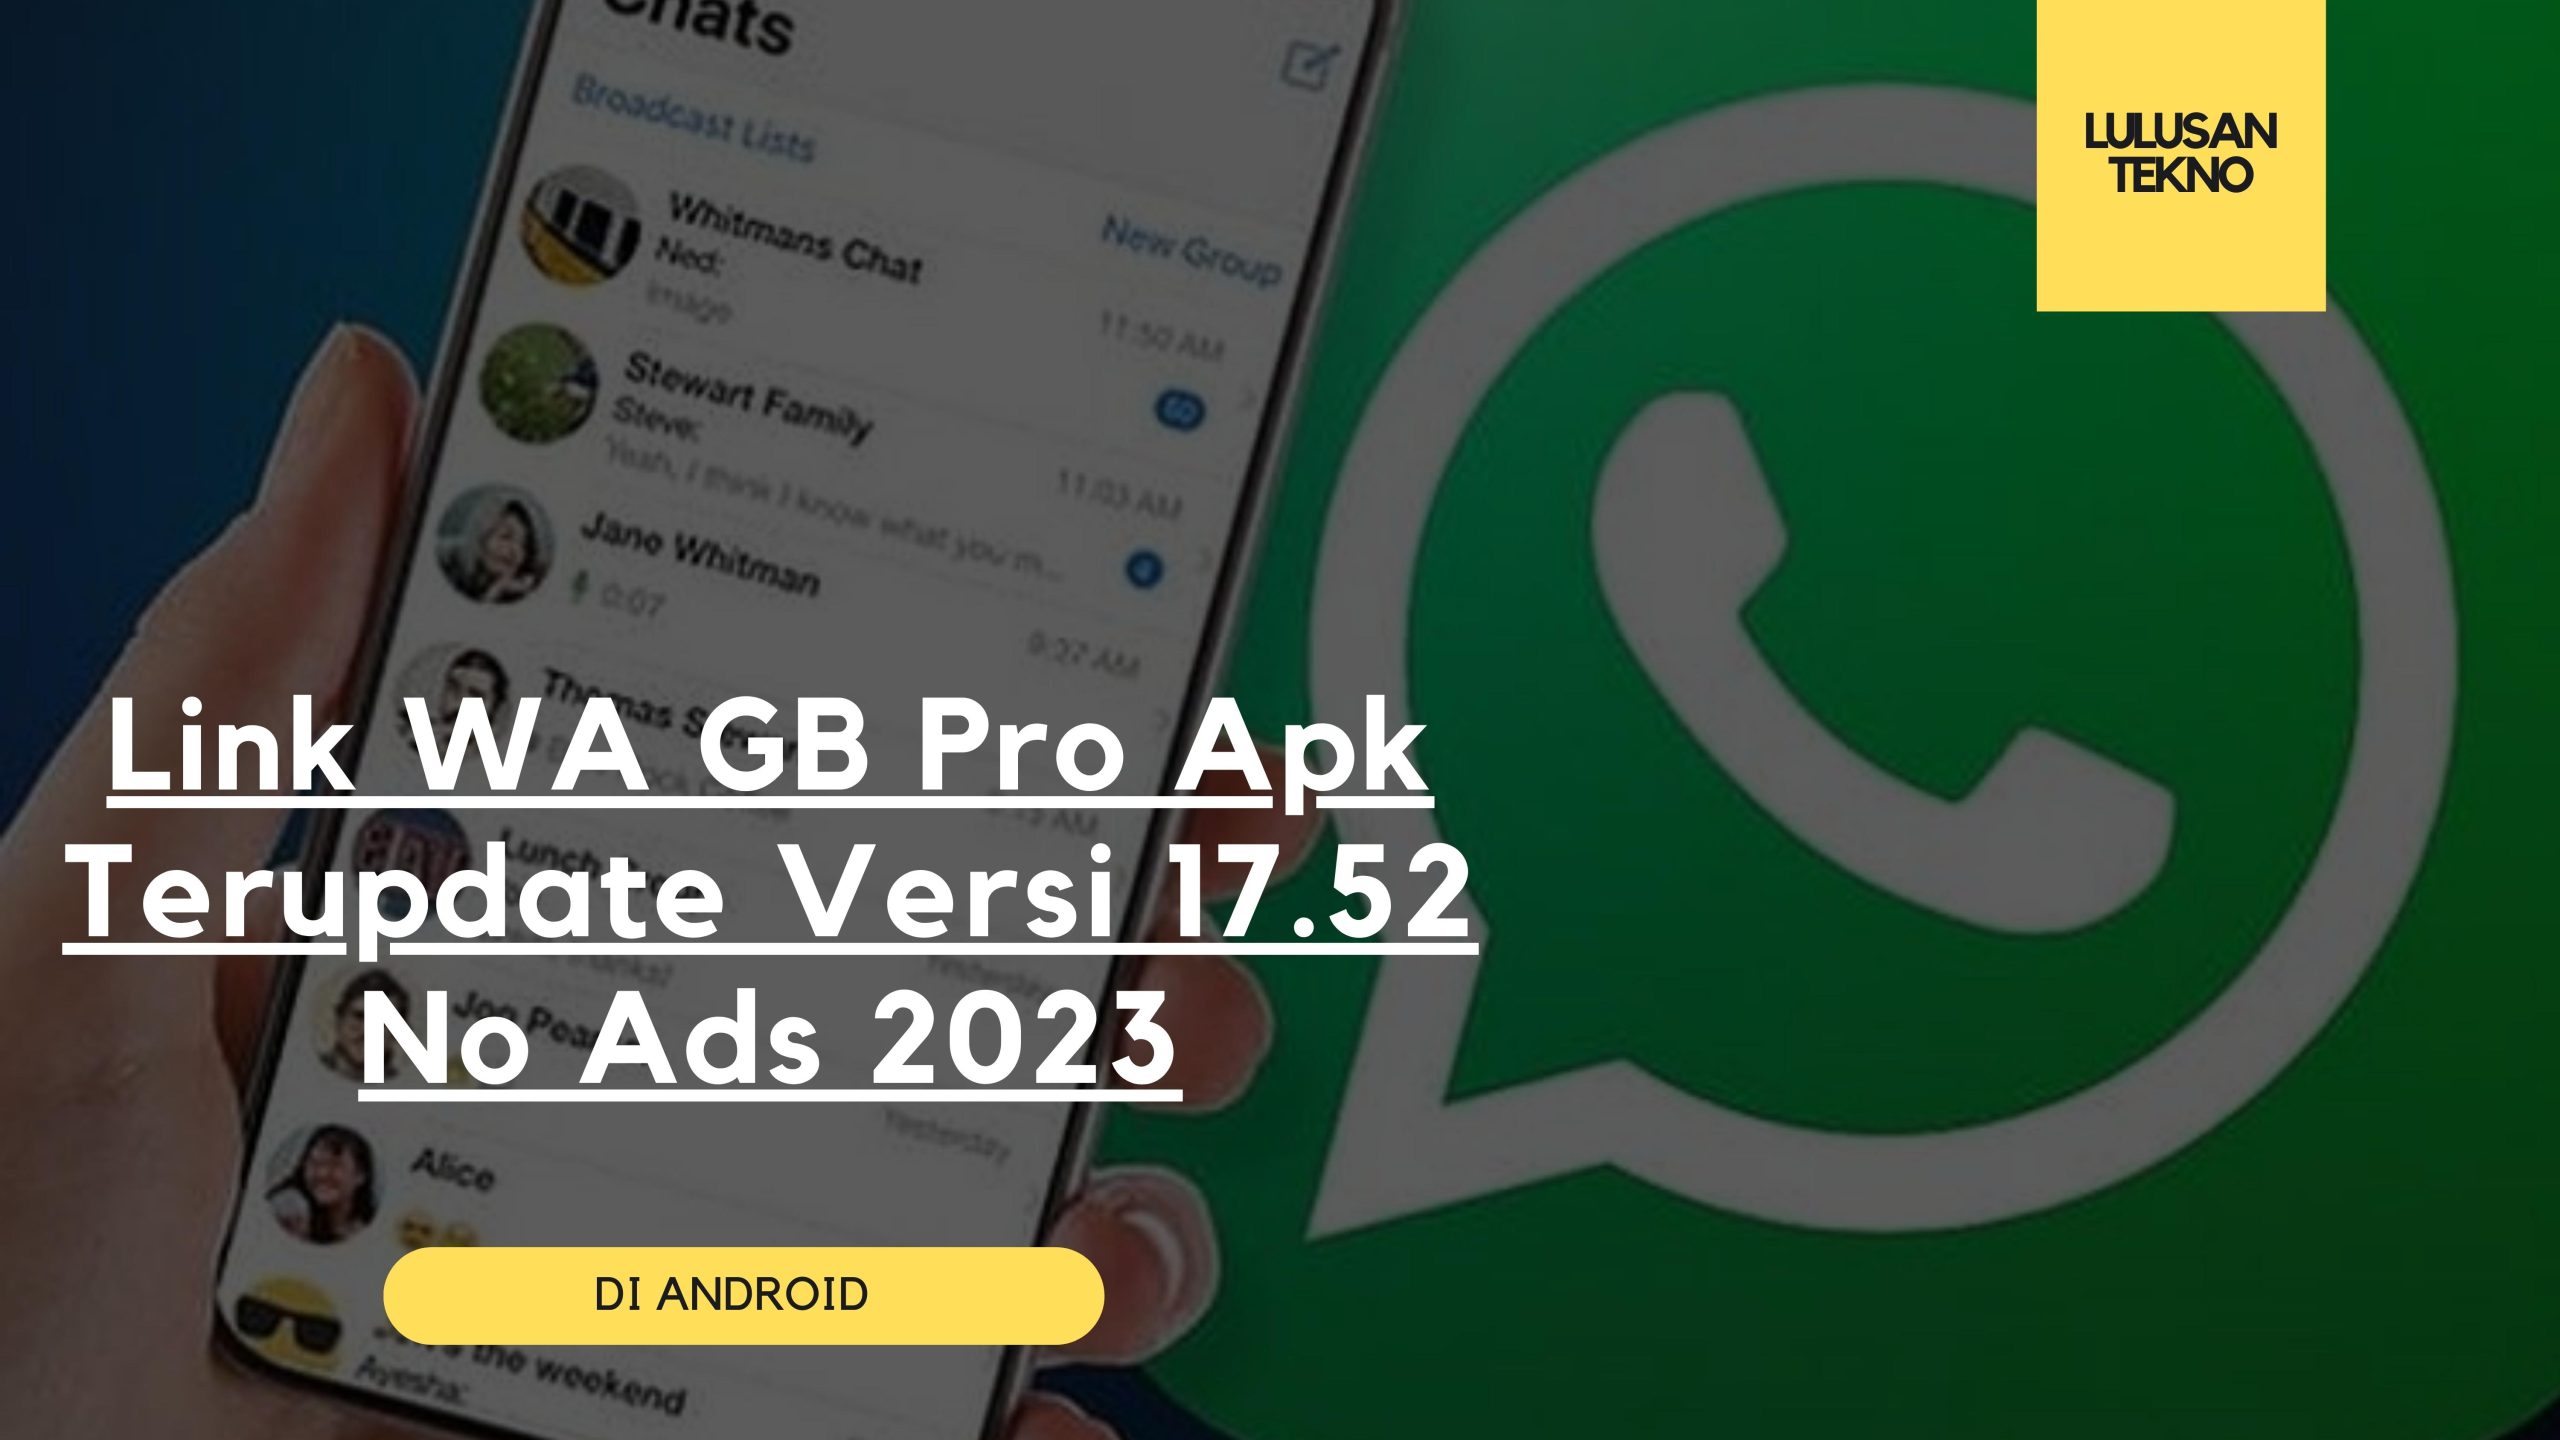 Link WA GB Pro Apk Terupdate Versi 17.52 No Ads 2023